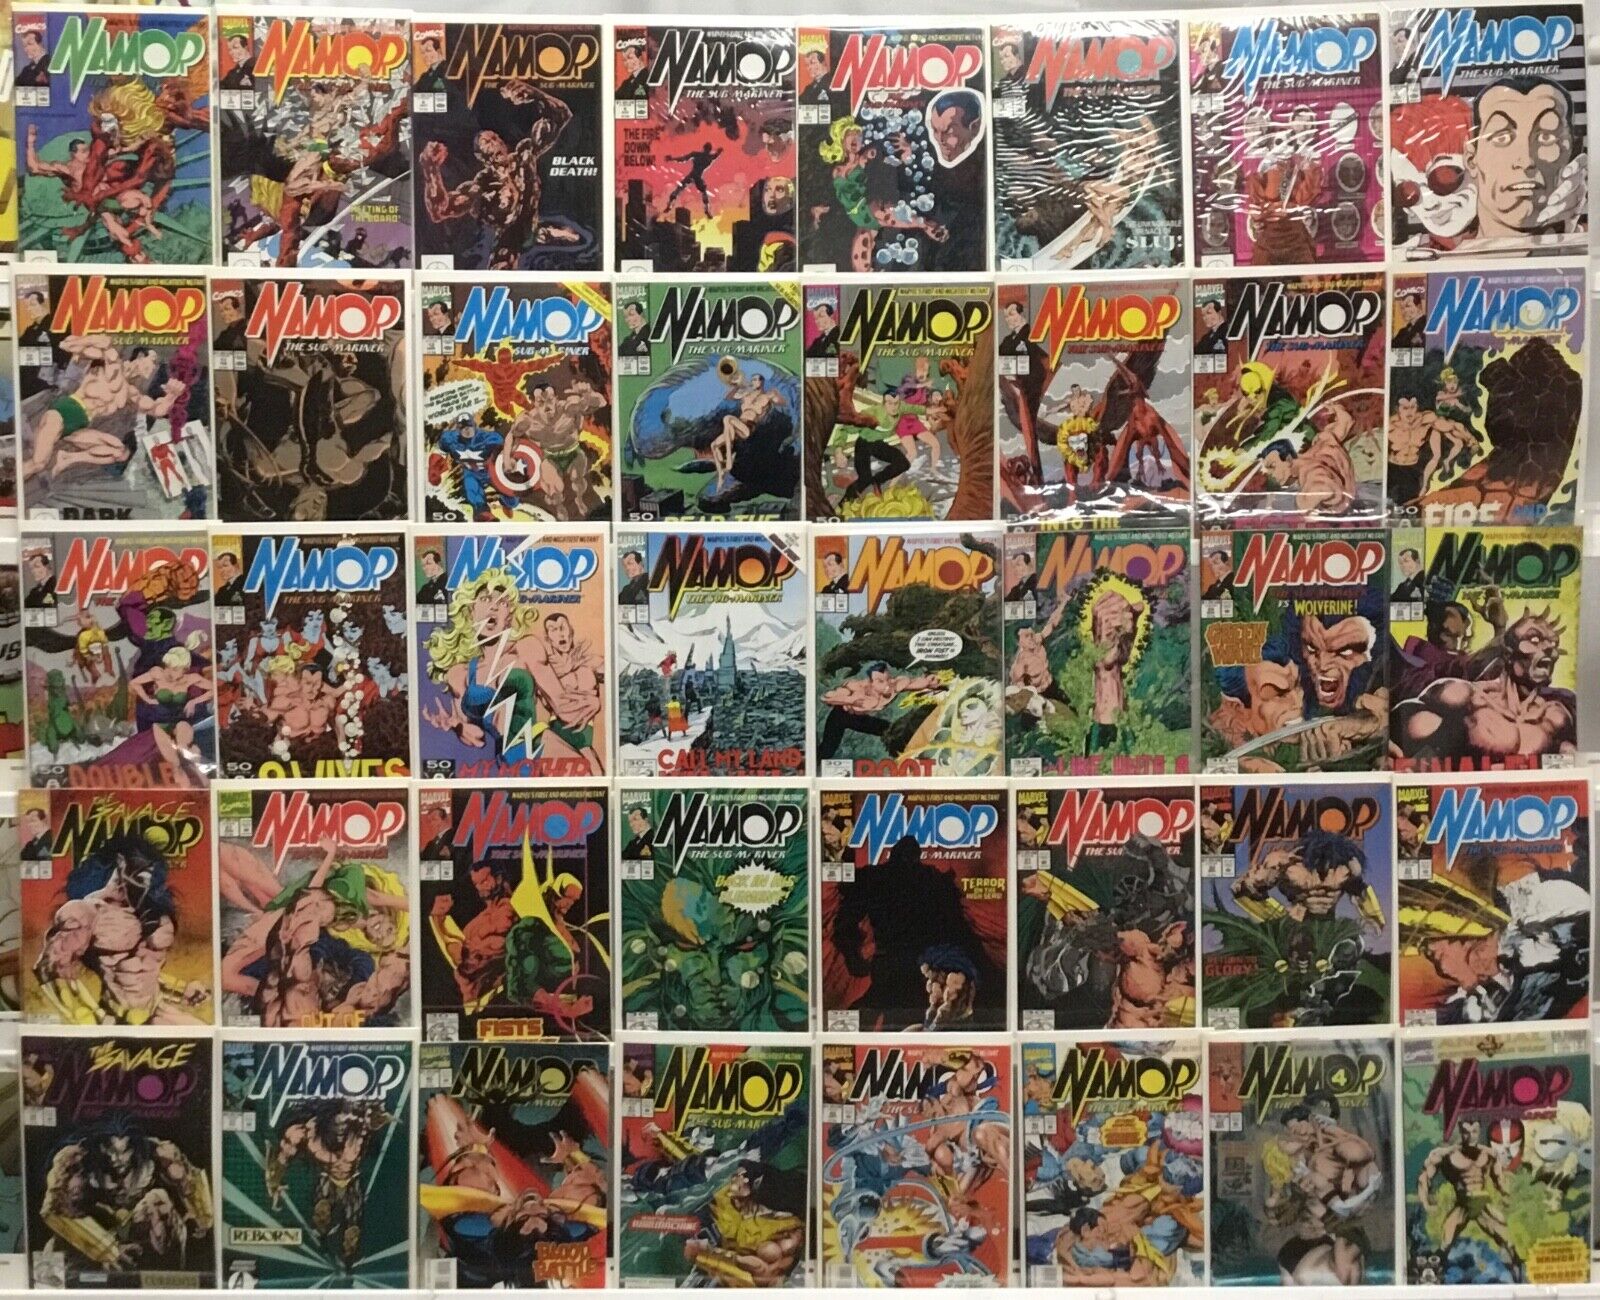 Marvel Comics - Namor, The Sub-Mariner - Comic Book Lot of 40 Issues